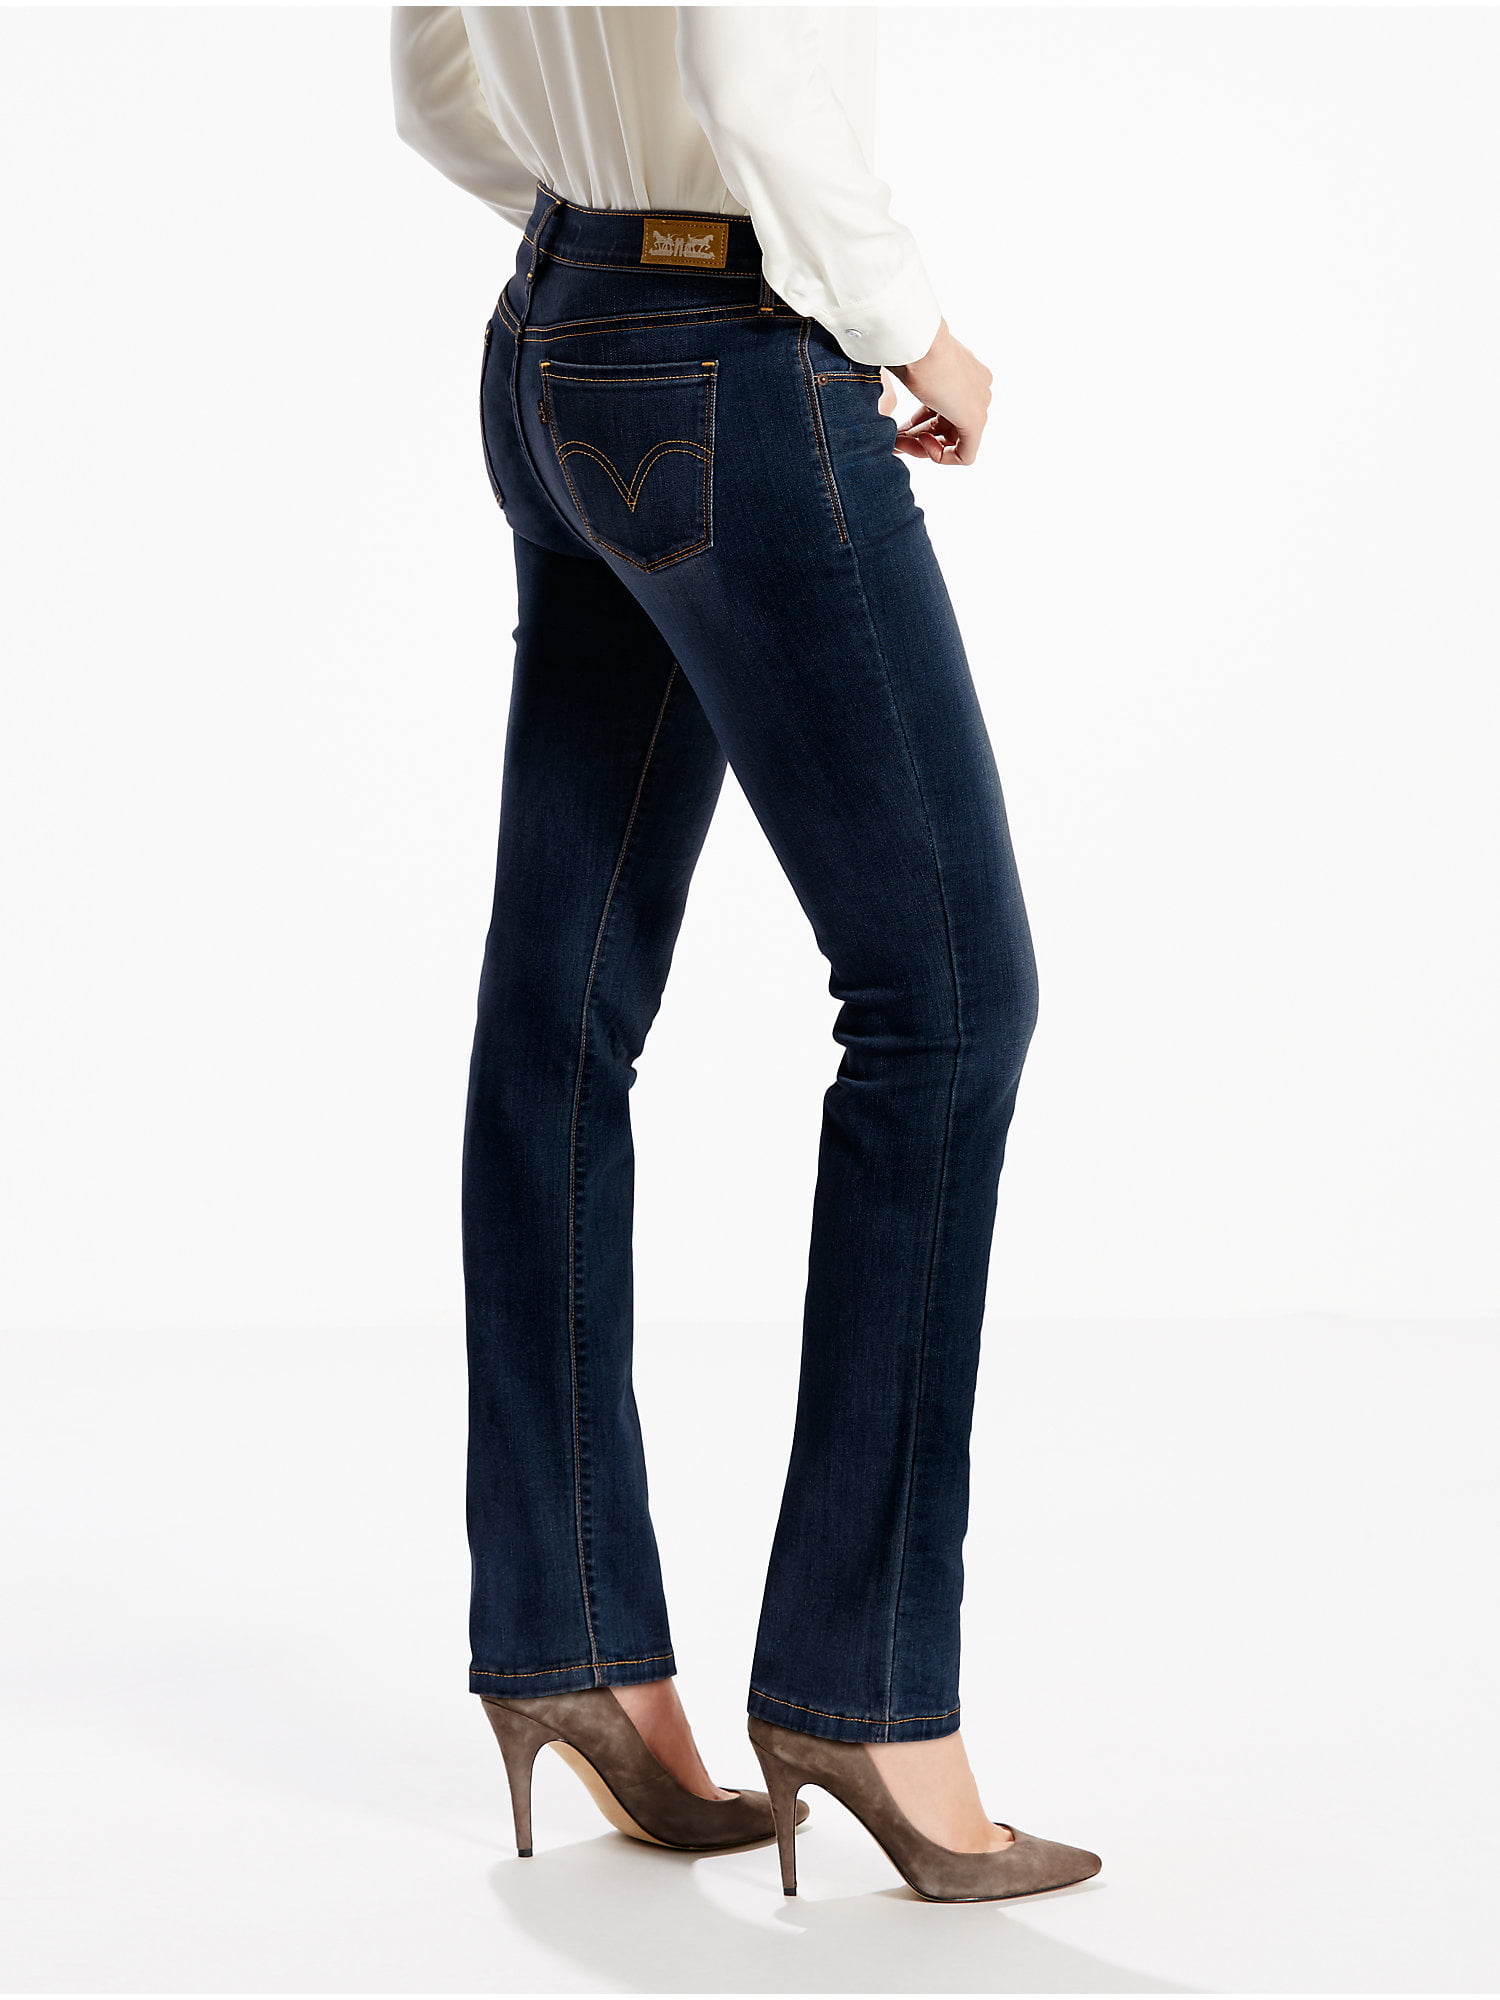 women's levi's 505 colored jeans